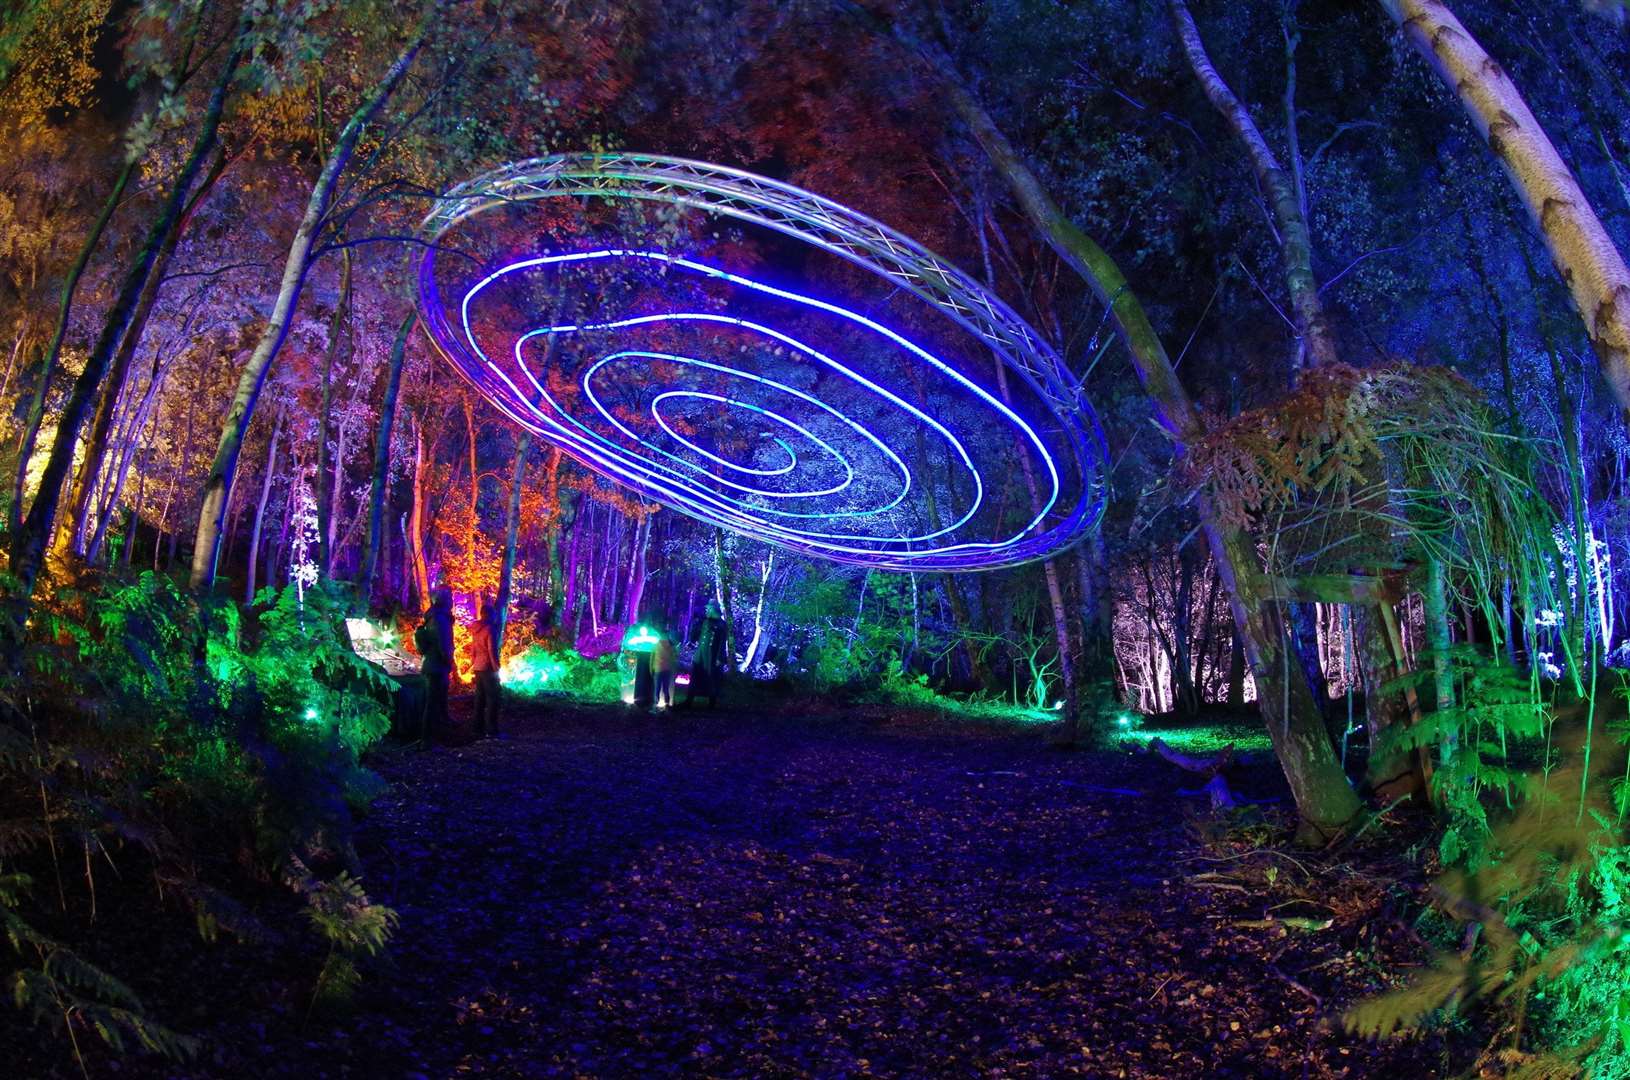 The light festival will brighten up the dark nights in Orkney.